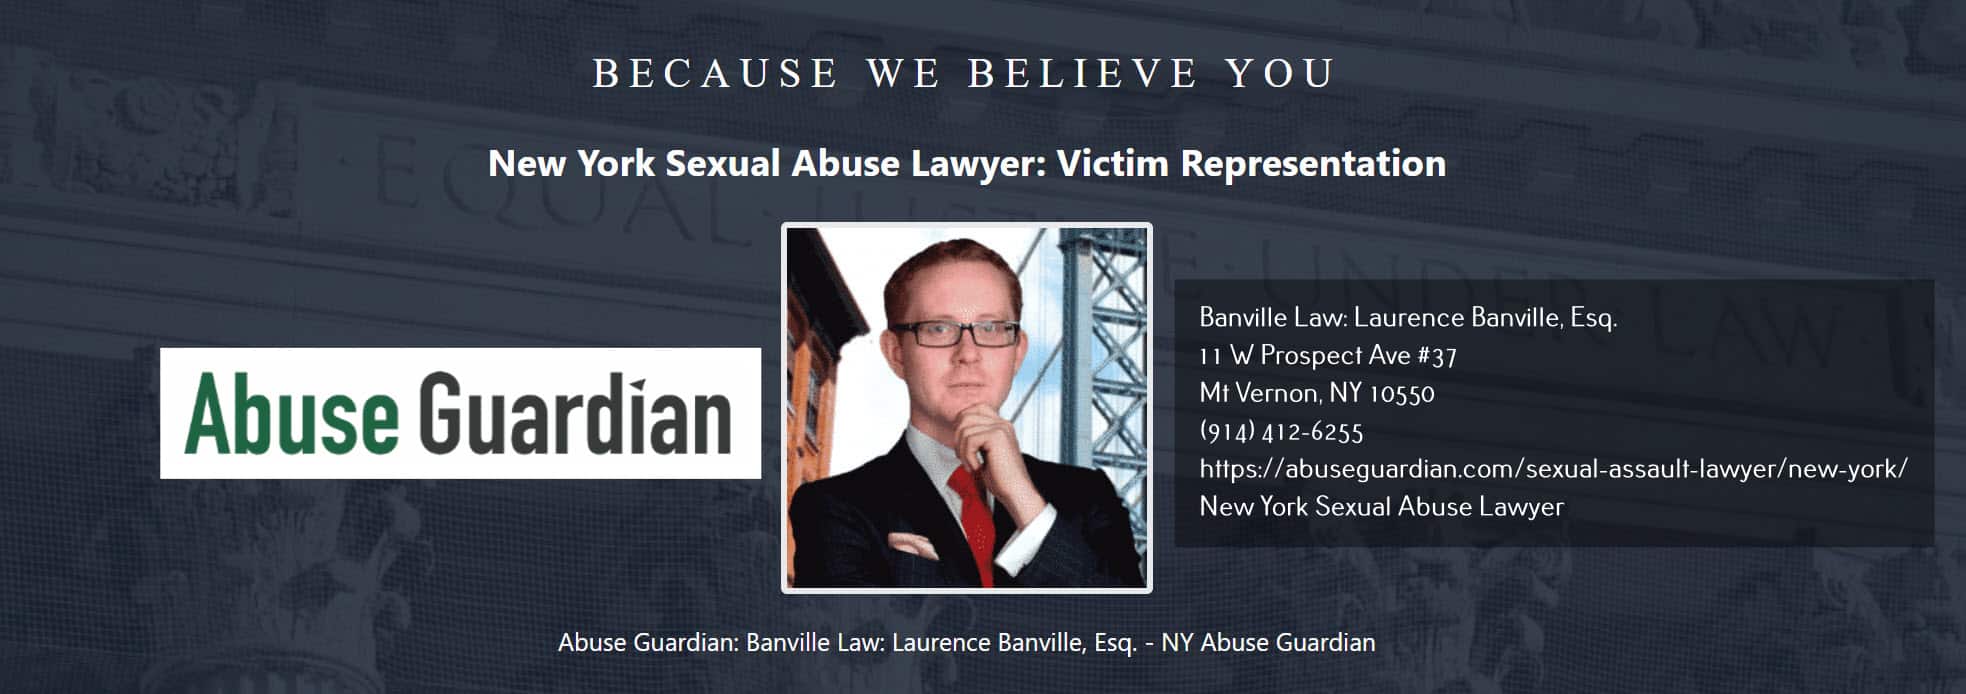 sexual abuse lawyer mt vernon banville law: laurence banville, esq.